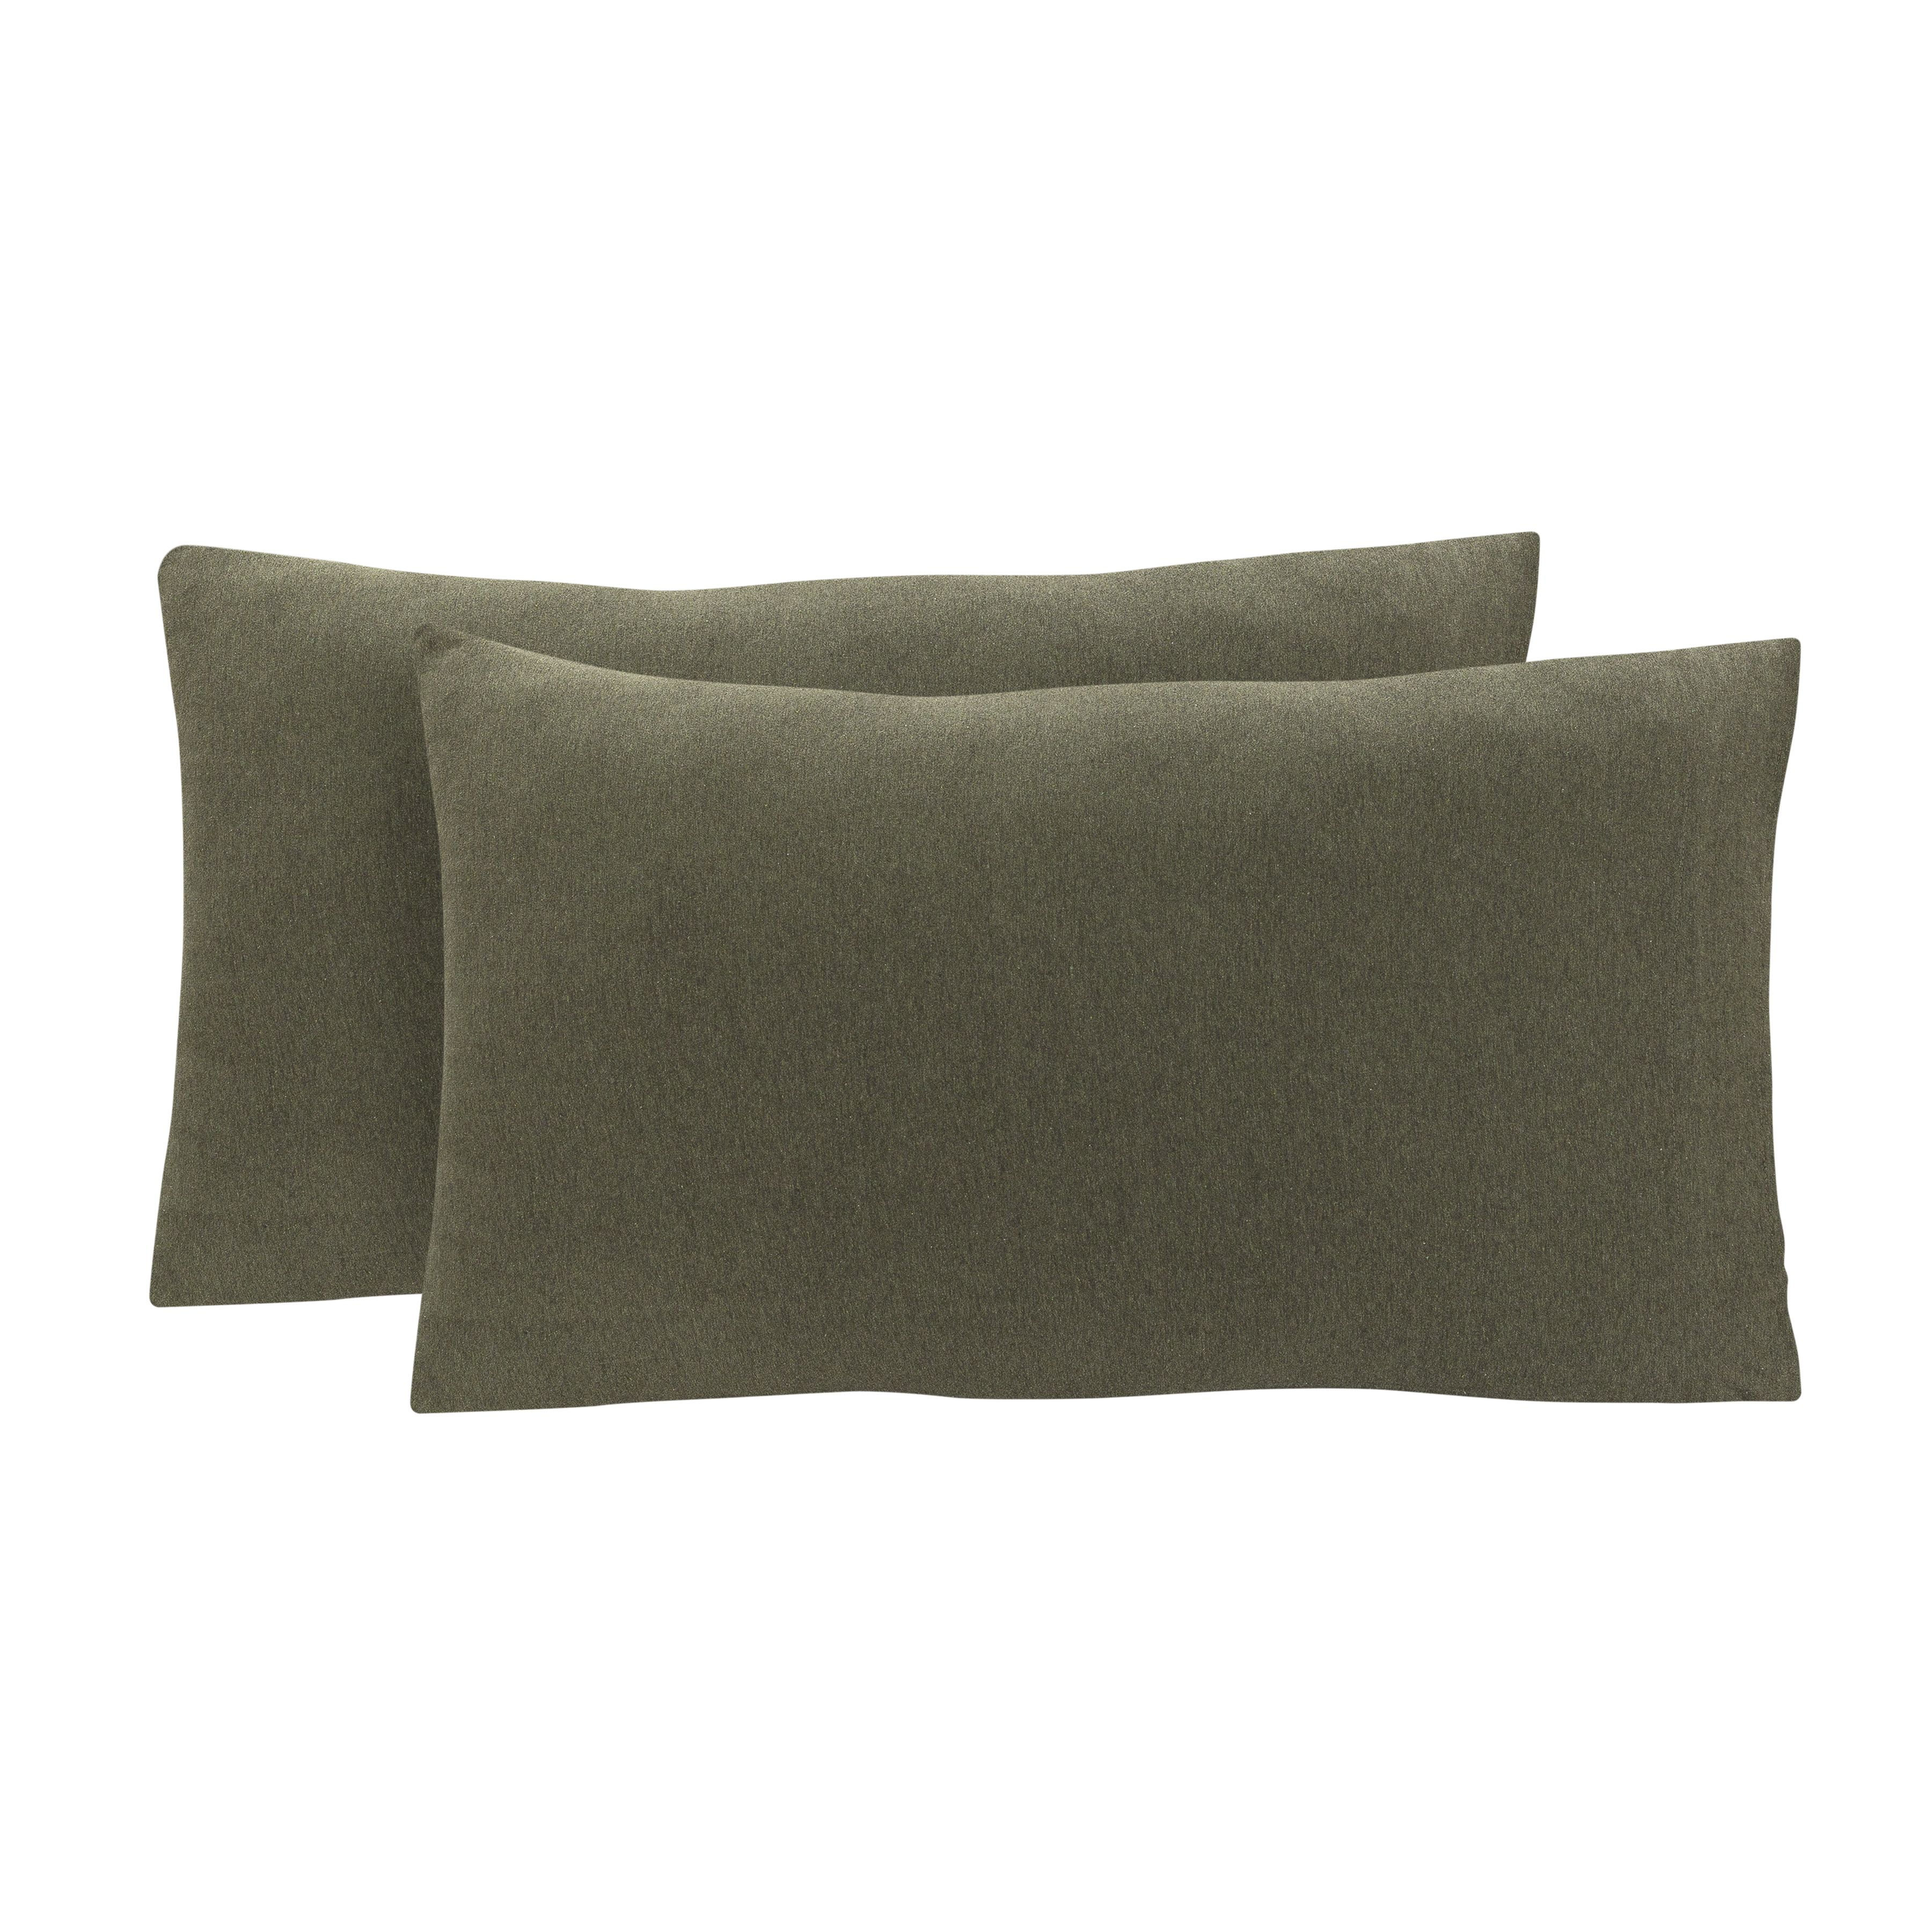 Mainstays Jersey Extra Soft Pillowcase Set, Standard/Queen, Sea Turtle, 2 Pcs